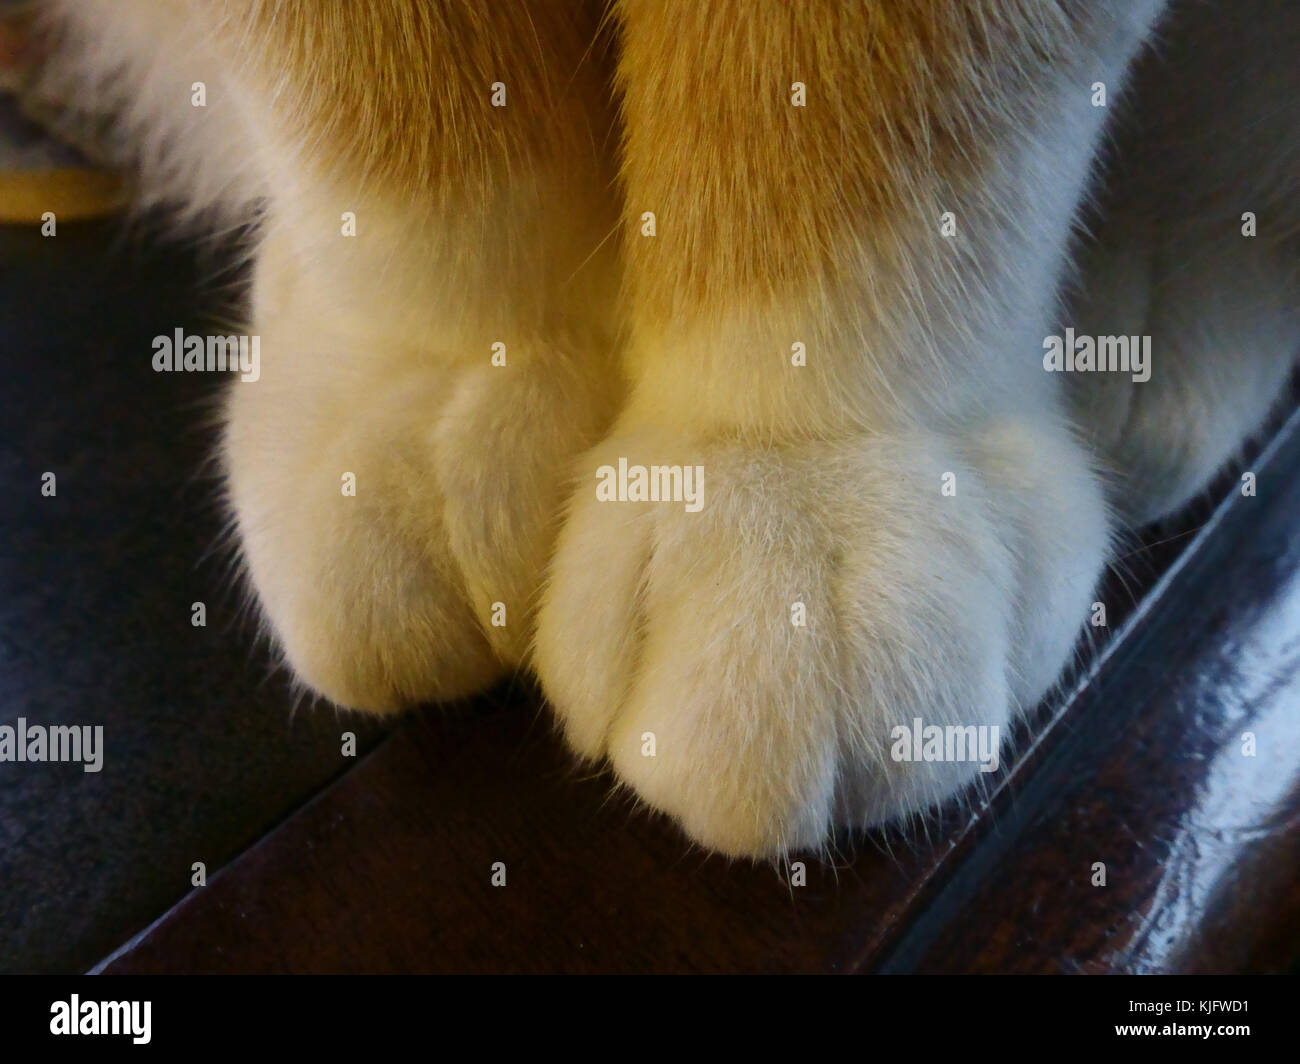 Botas en blanco peludo gato garras de jengibre, sentada en un escritorio Foto de stock